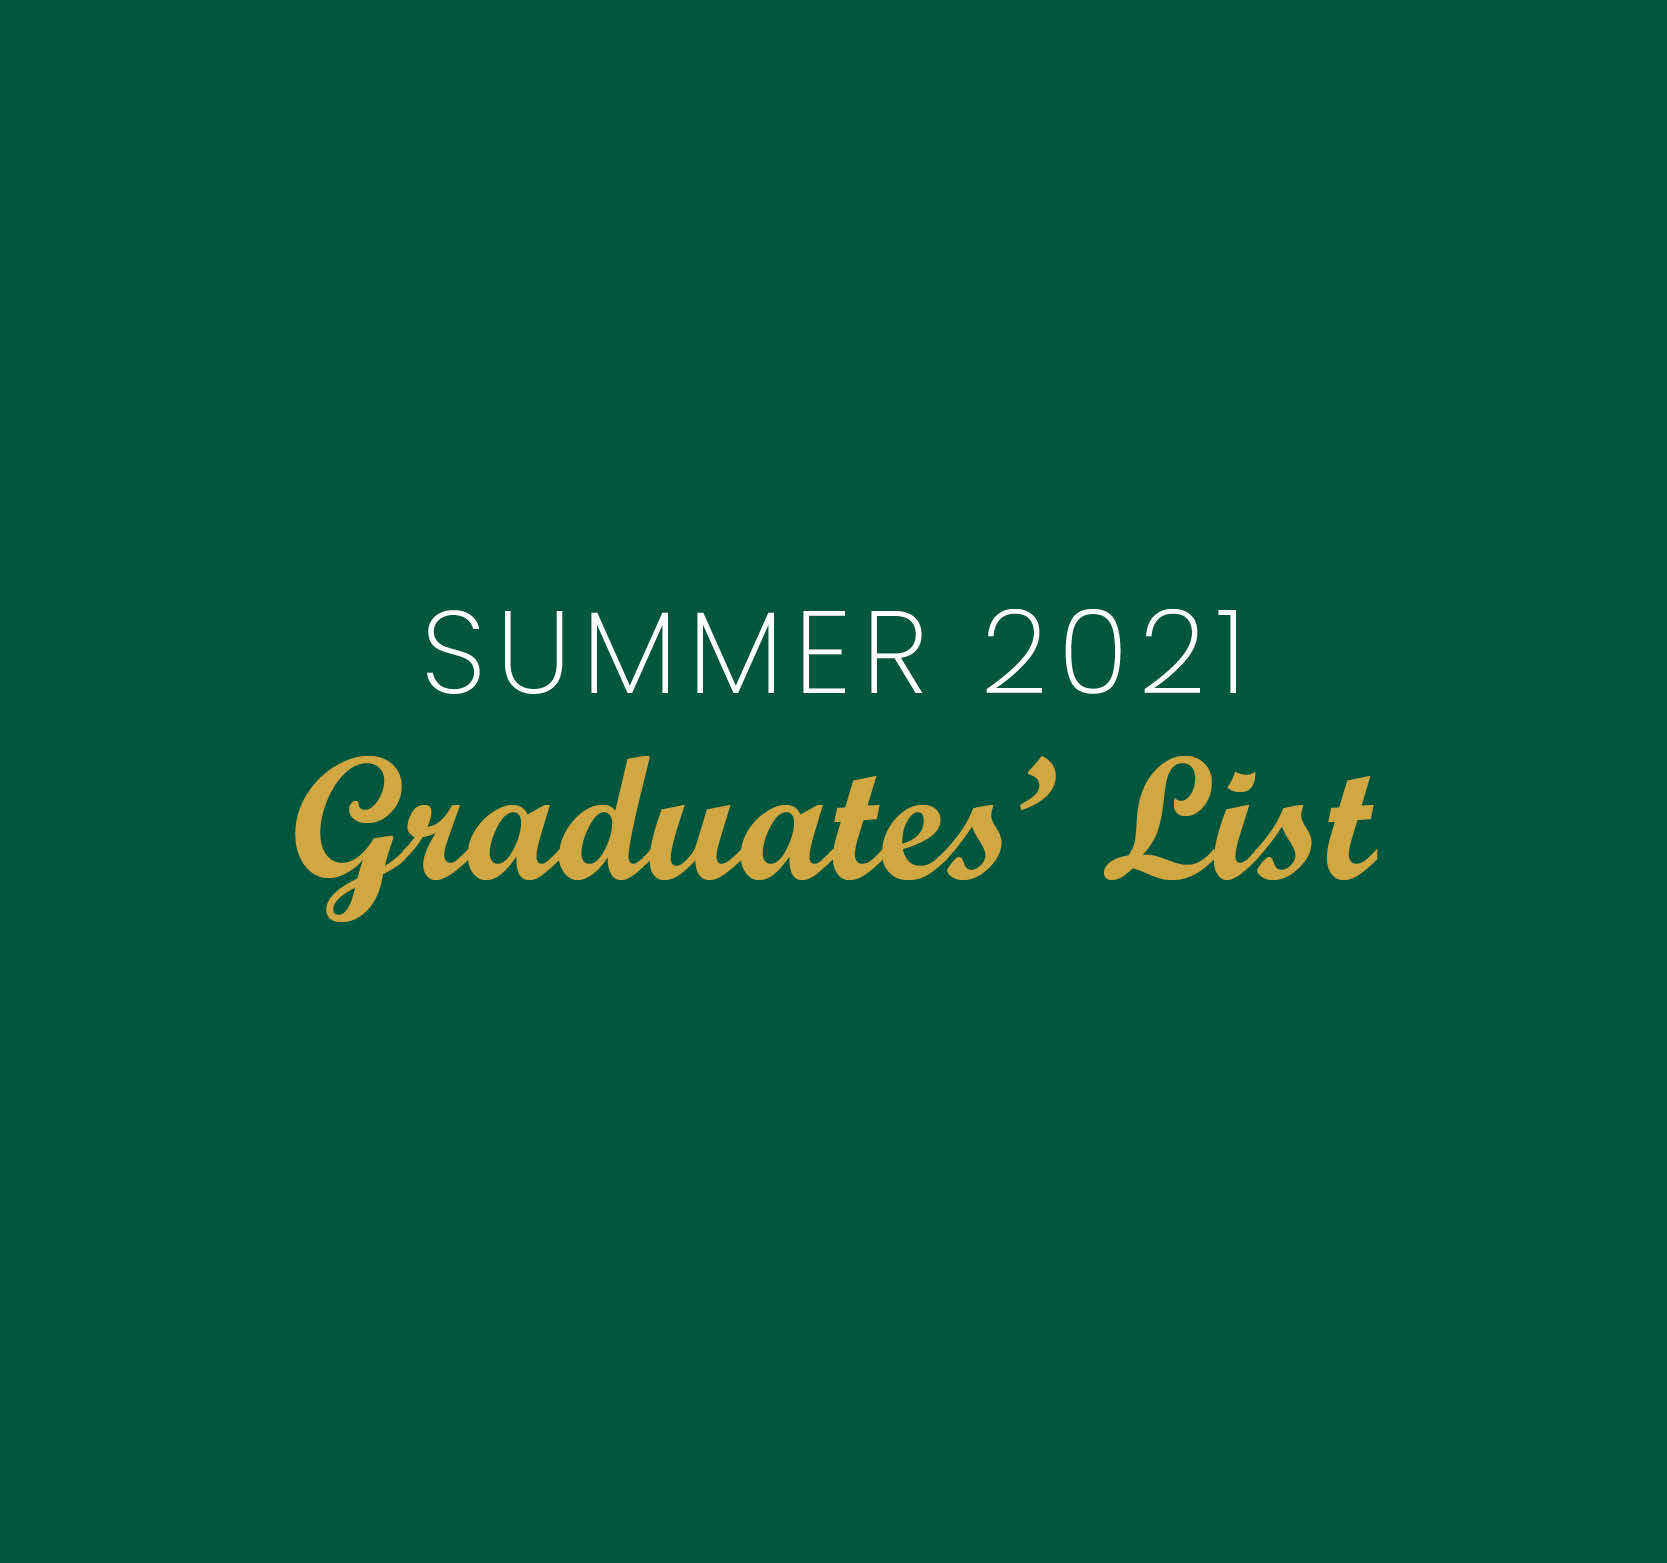 Image for Summer 2021 Graduates' List